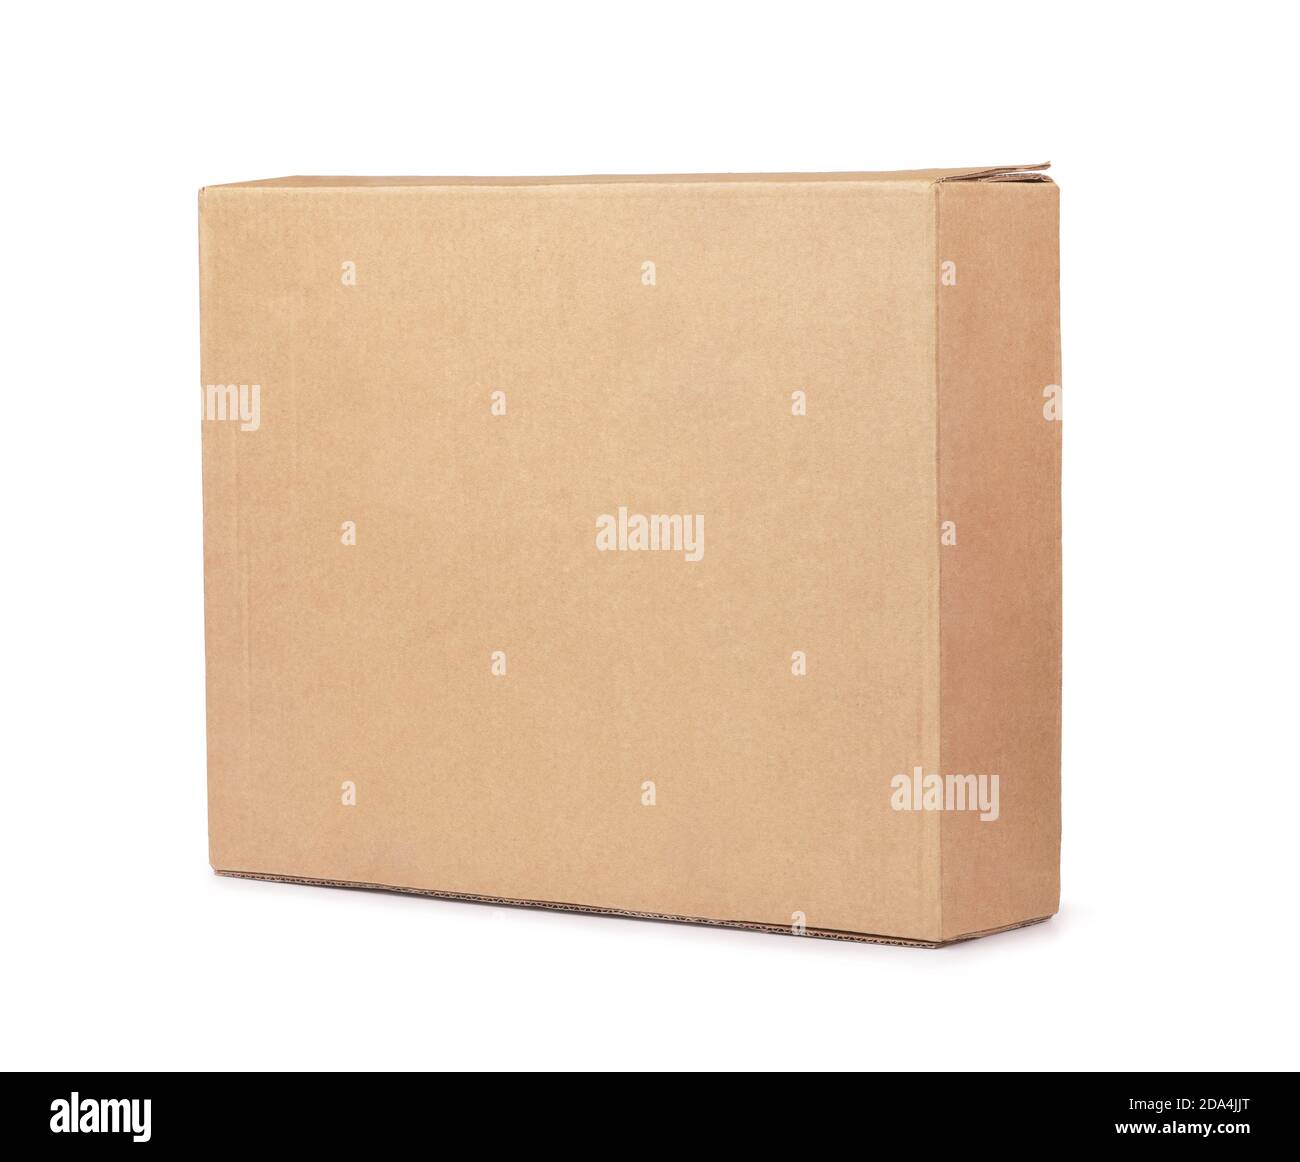 Caja plana de cartón marrón en blanco aislada sobre blanco Foto de stock